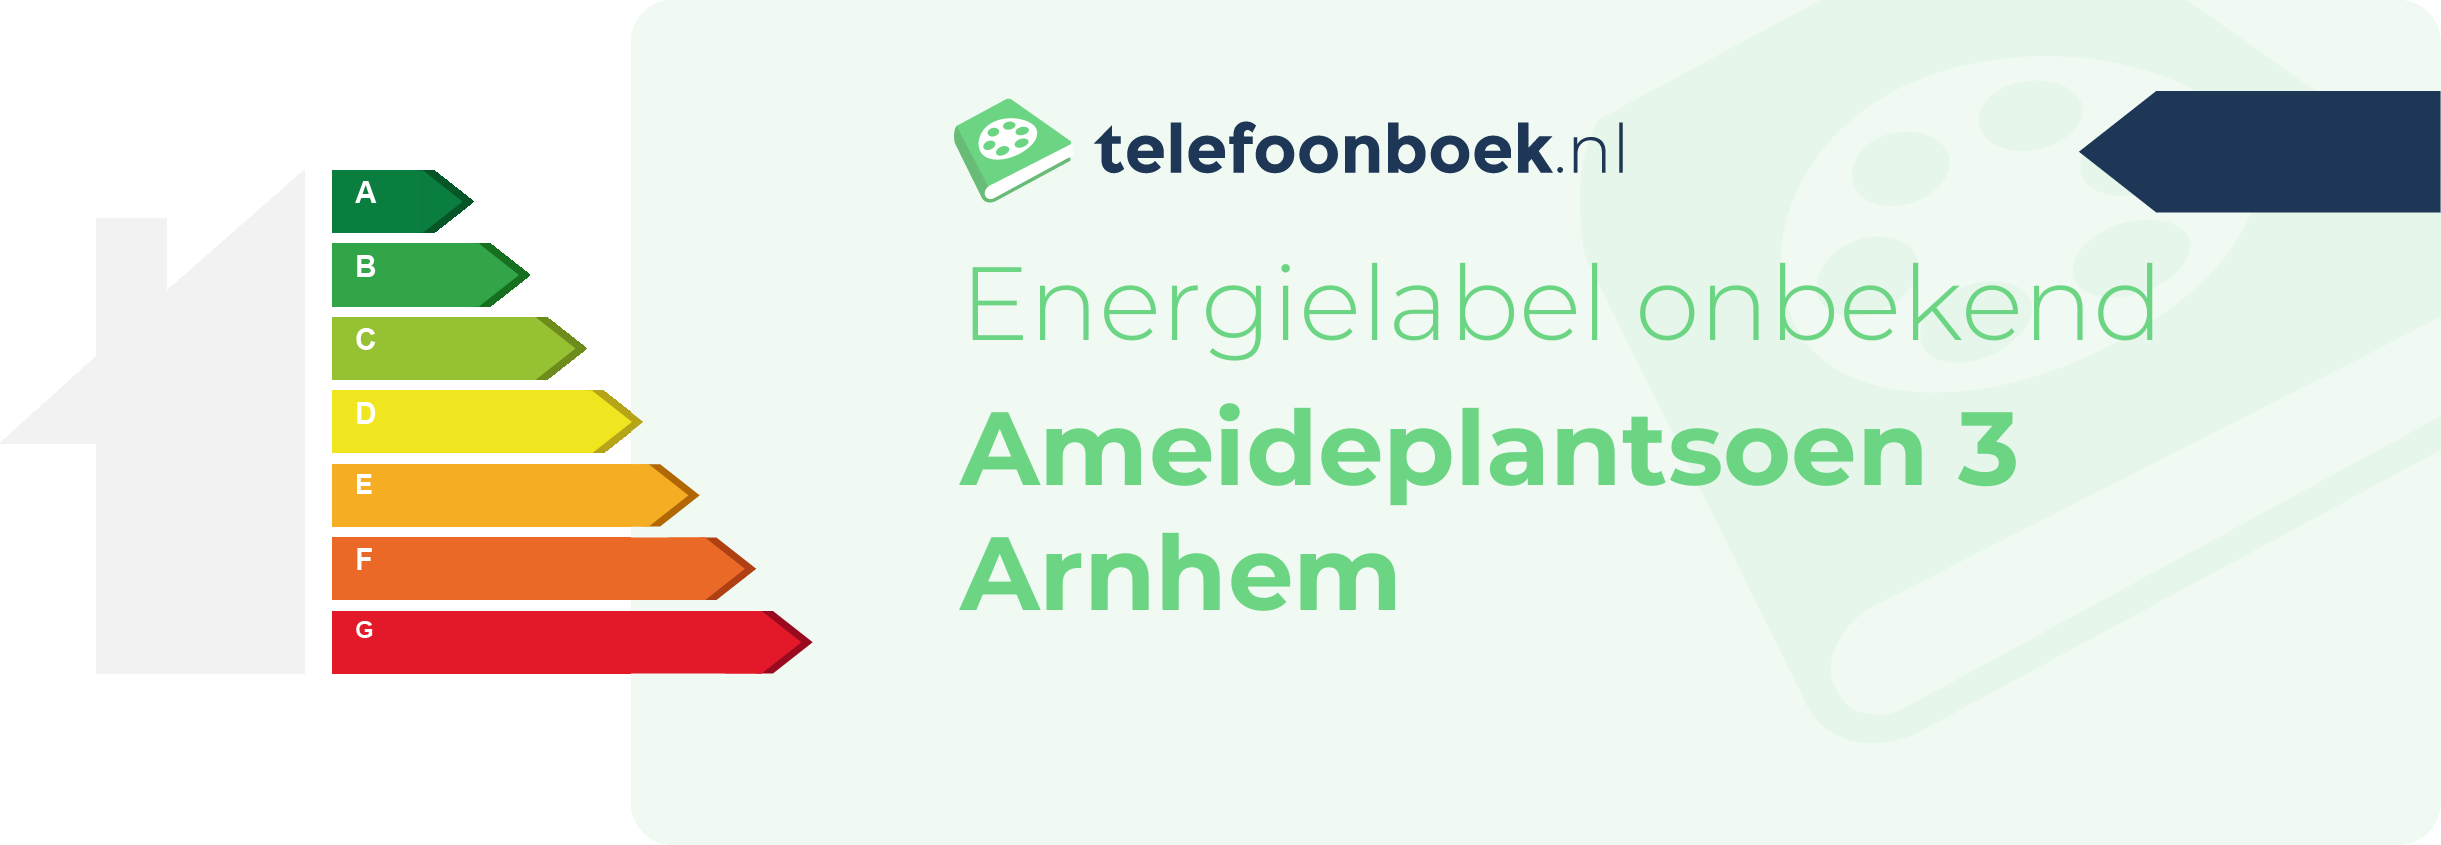 Energielabel Ameideplantsoen 3 Arnhem